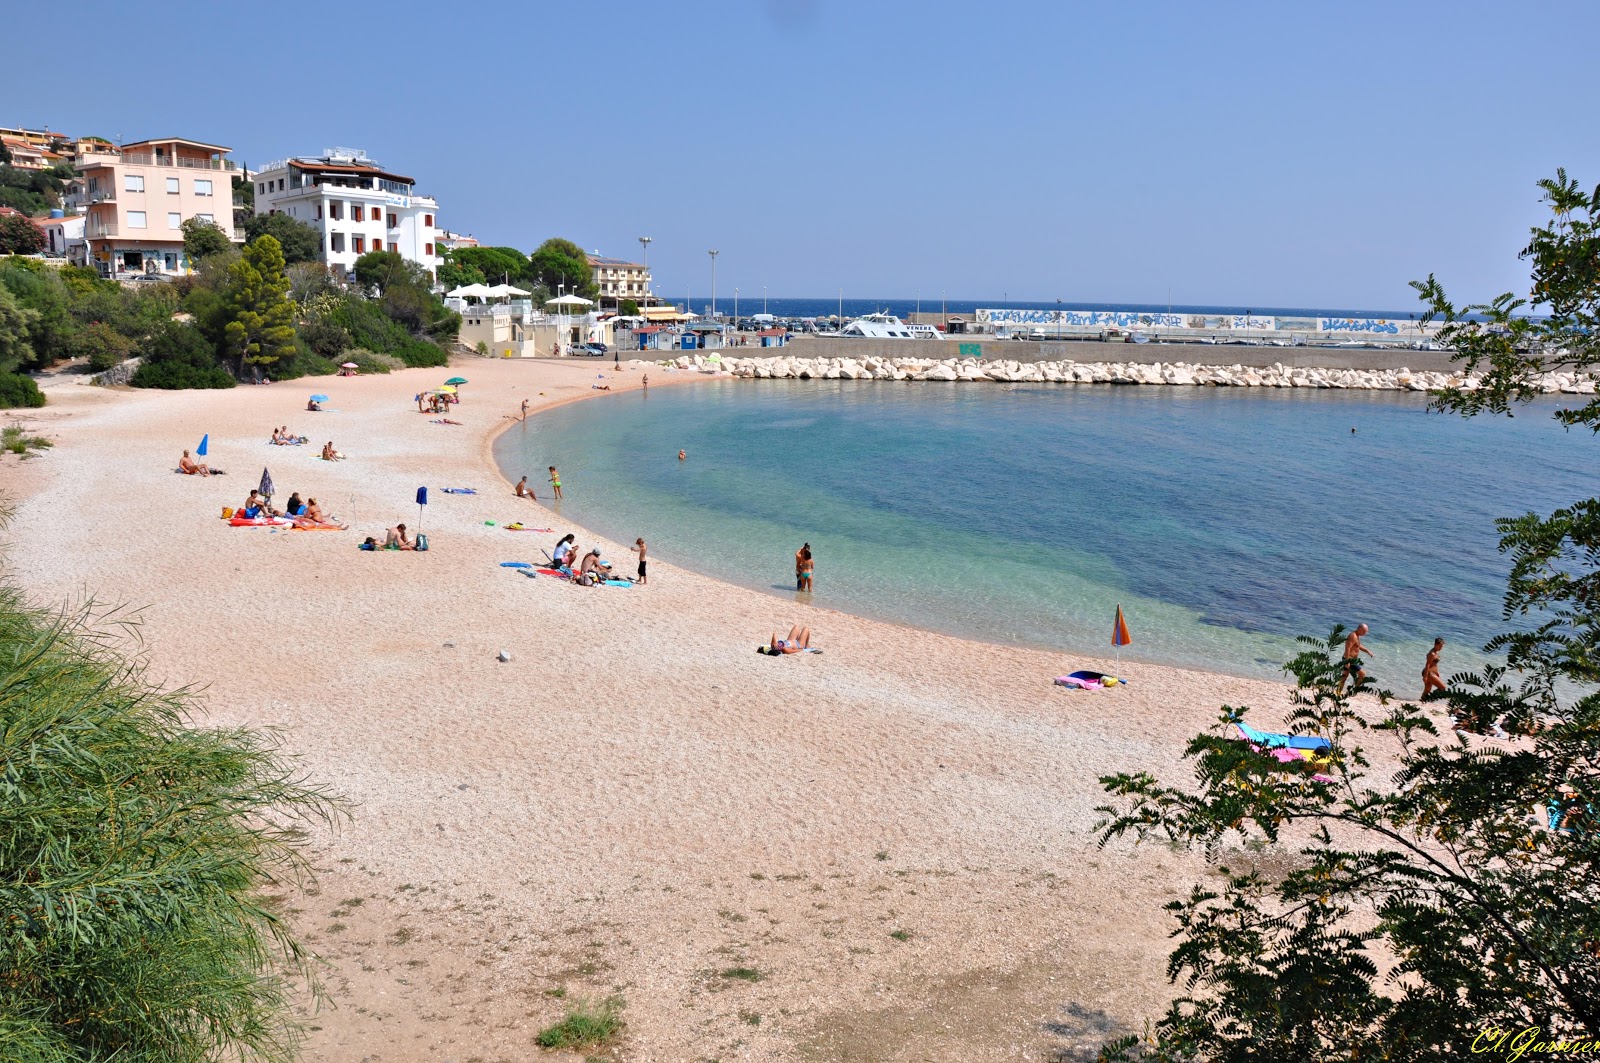 Spiaggia Di Cala Gonone'in fotoğrafı turkuaz saf su yüzey ile